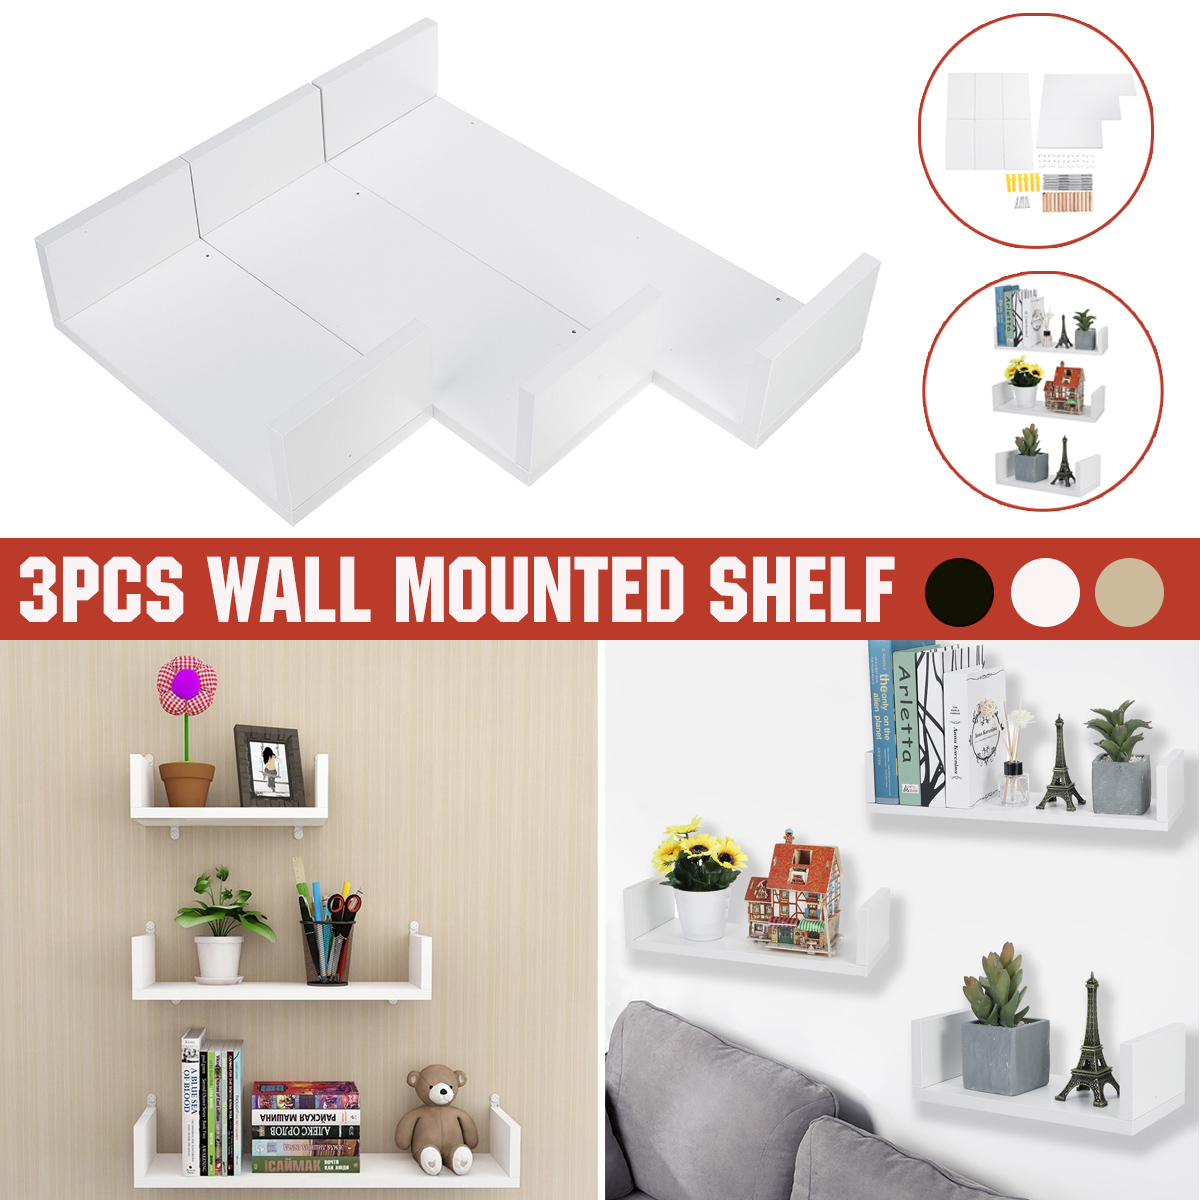 U Shape Wall Mounted Storage Shelves Room Display Floating Shelf Units MDF Wood